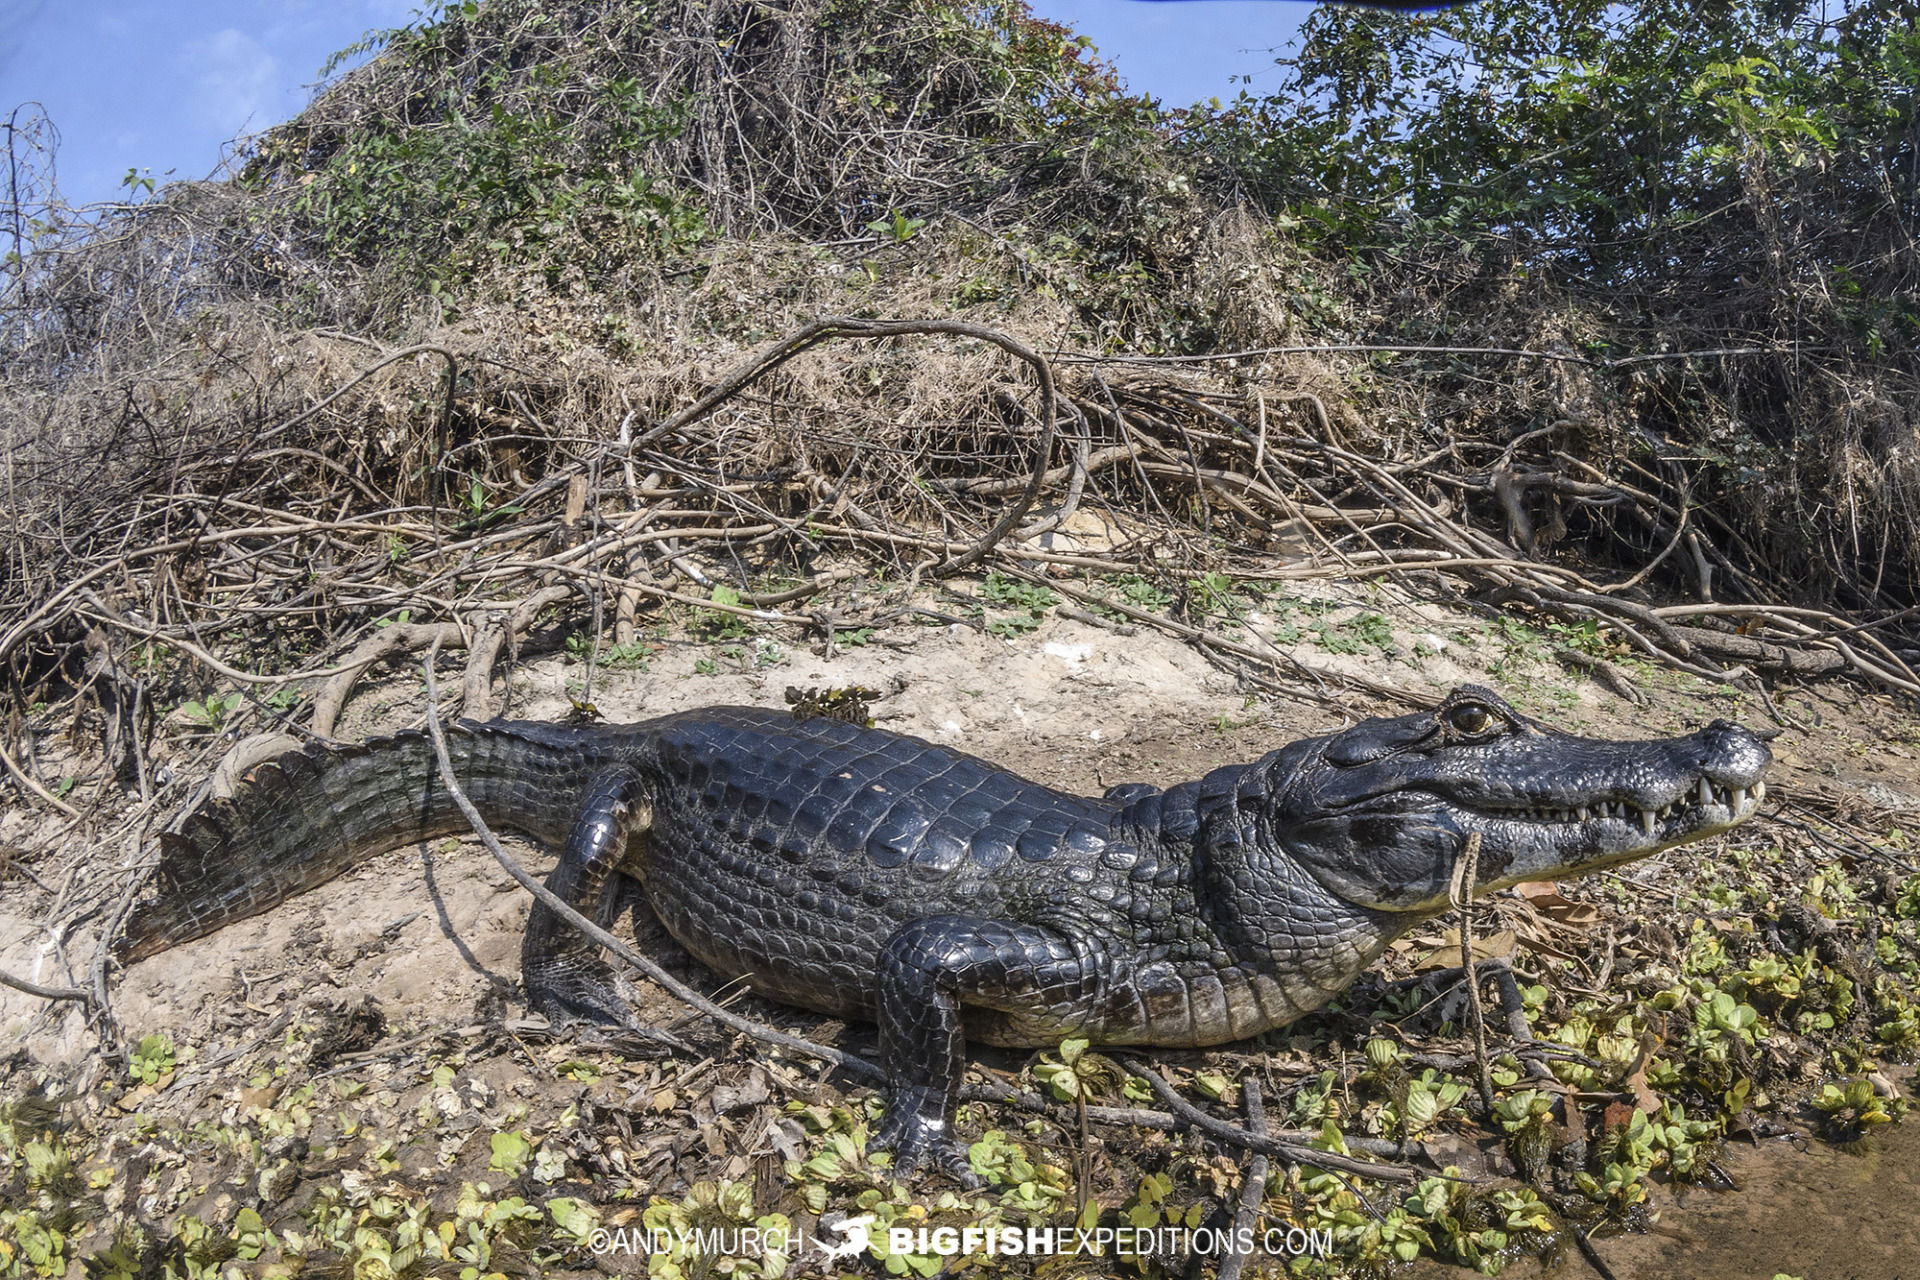 Yacare caiman in the Pantanal.